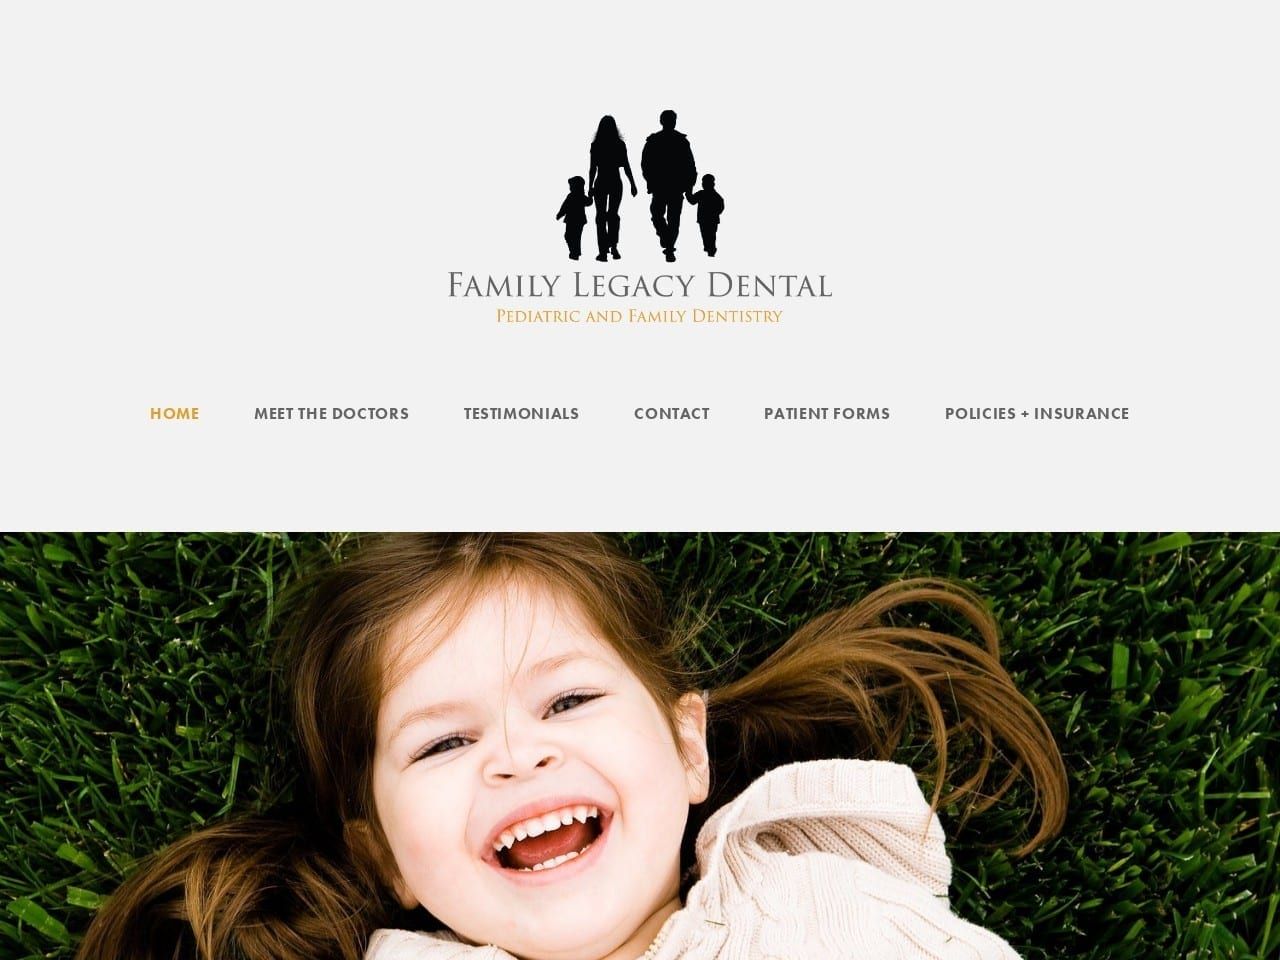 Family Legacy Dental Website Screenshot from familylegacydental.com